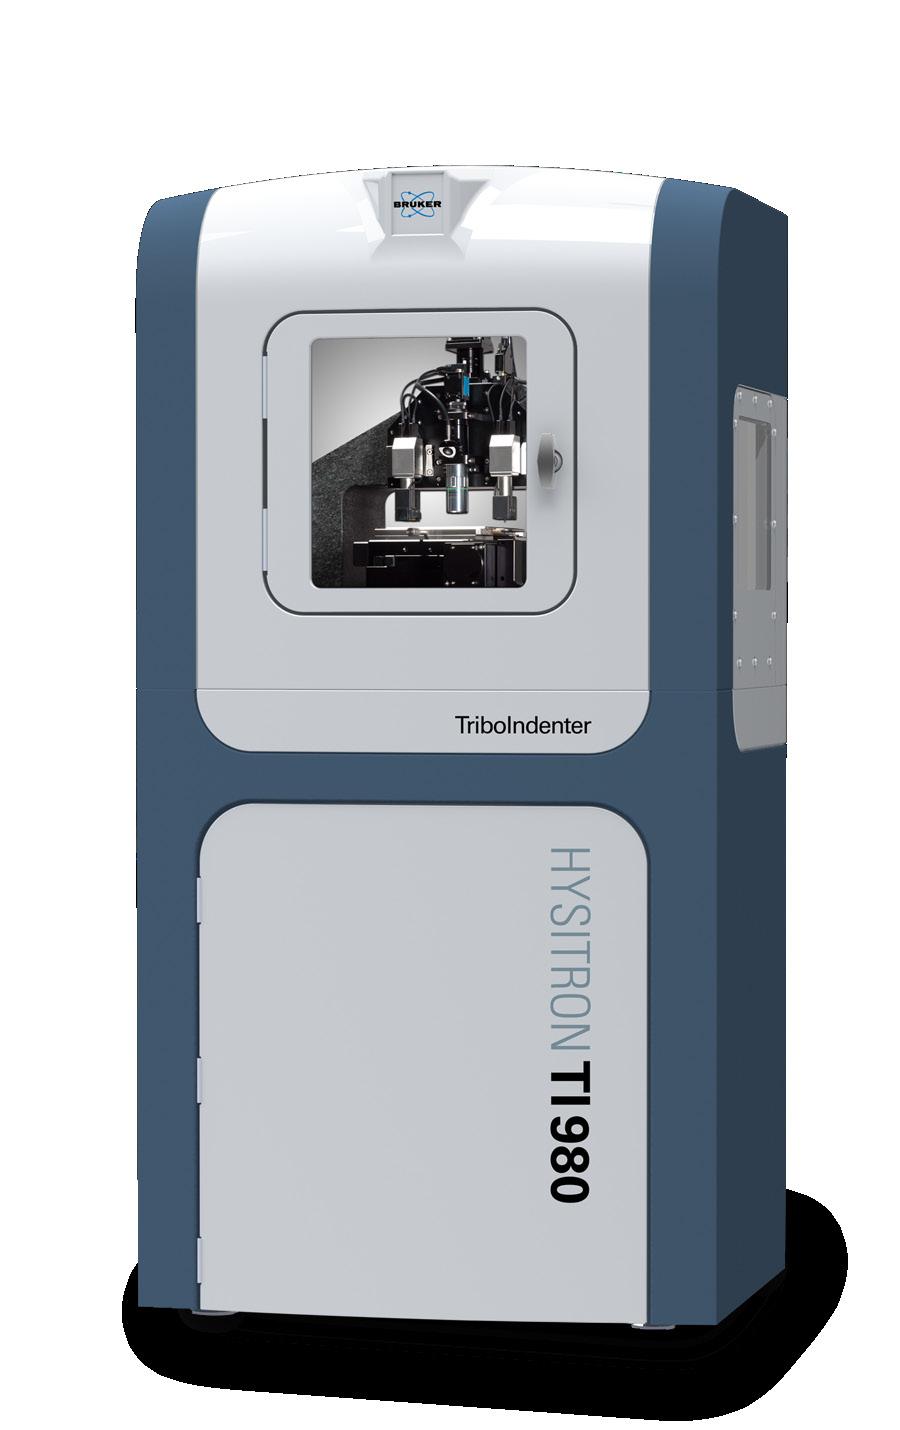 Hysitron TI 980 TriboIndenter Accelerate Nanomechanical Research to the Next Level Bruker s Hysitron TI 980 TriboIndenter operates at the intersection of maximum performance, flexibility,